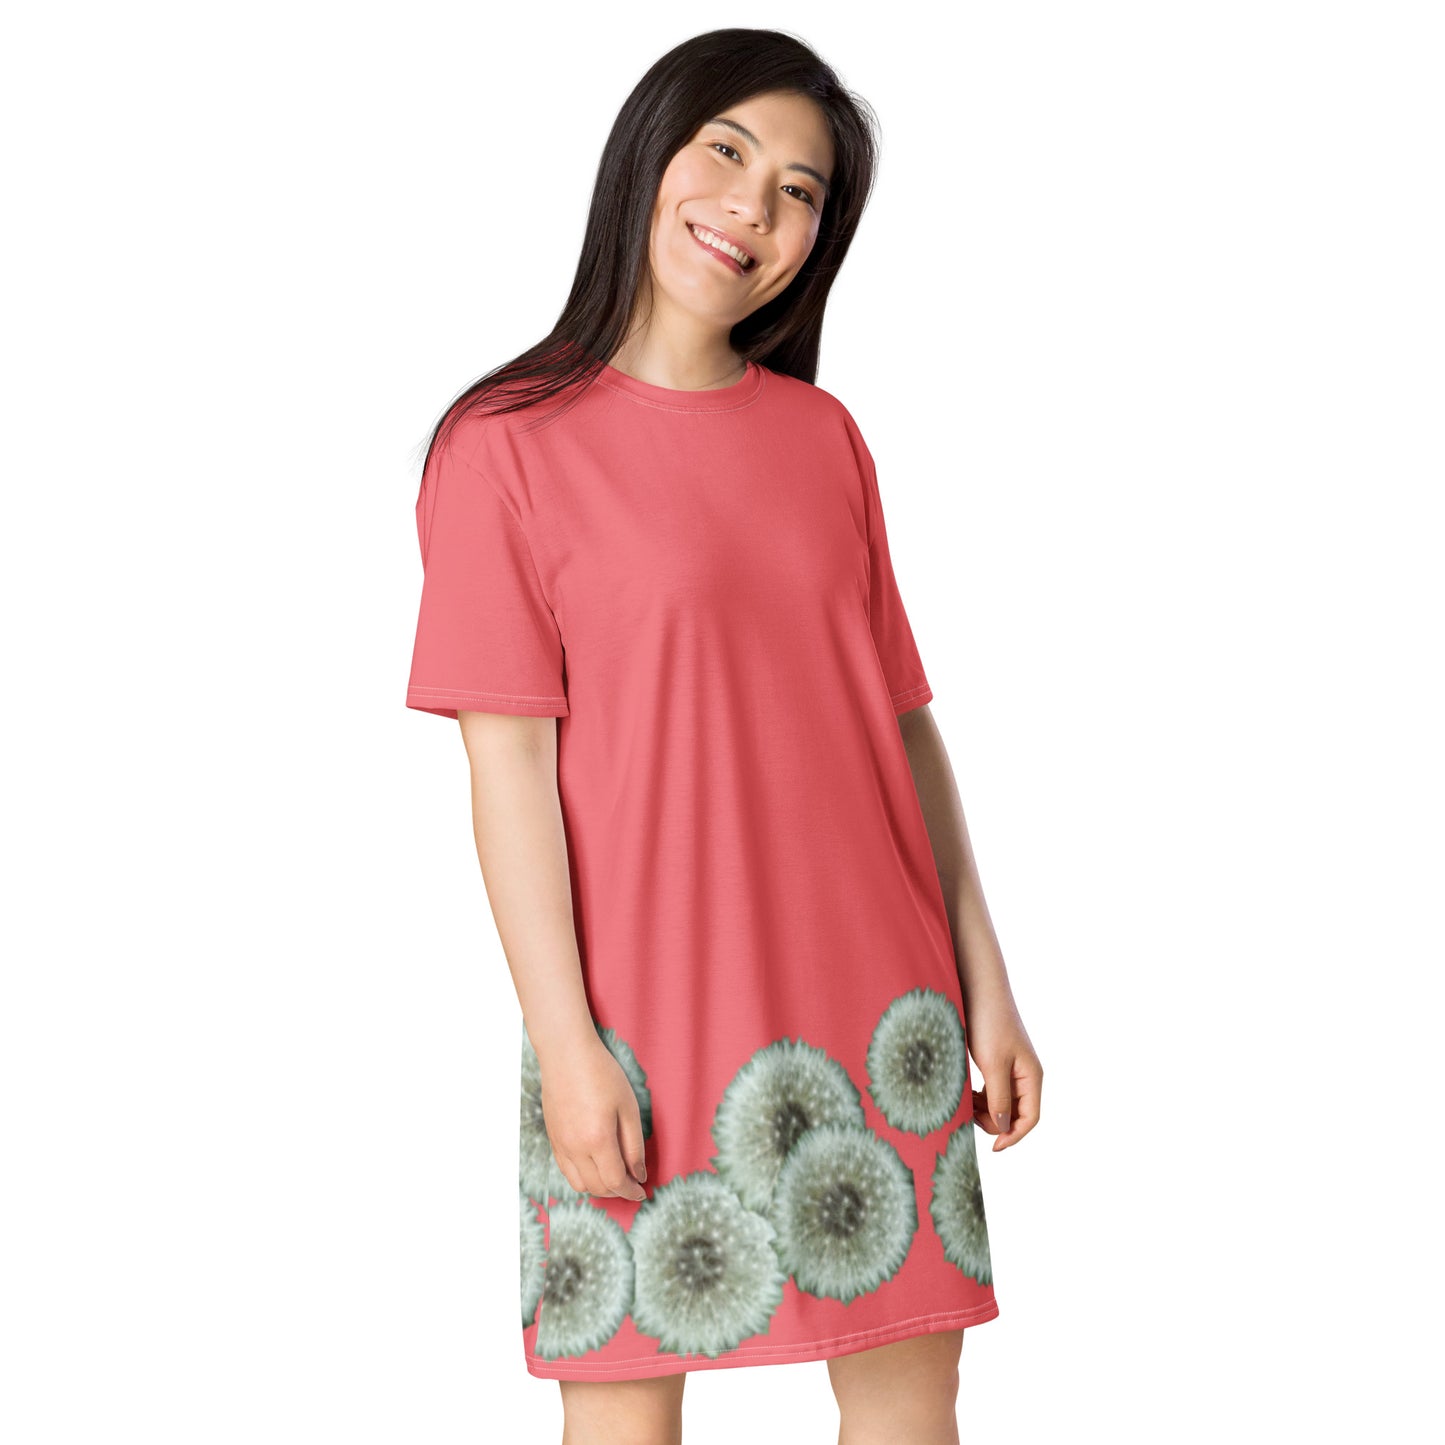 T-shirt dress Dandelions on pink